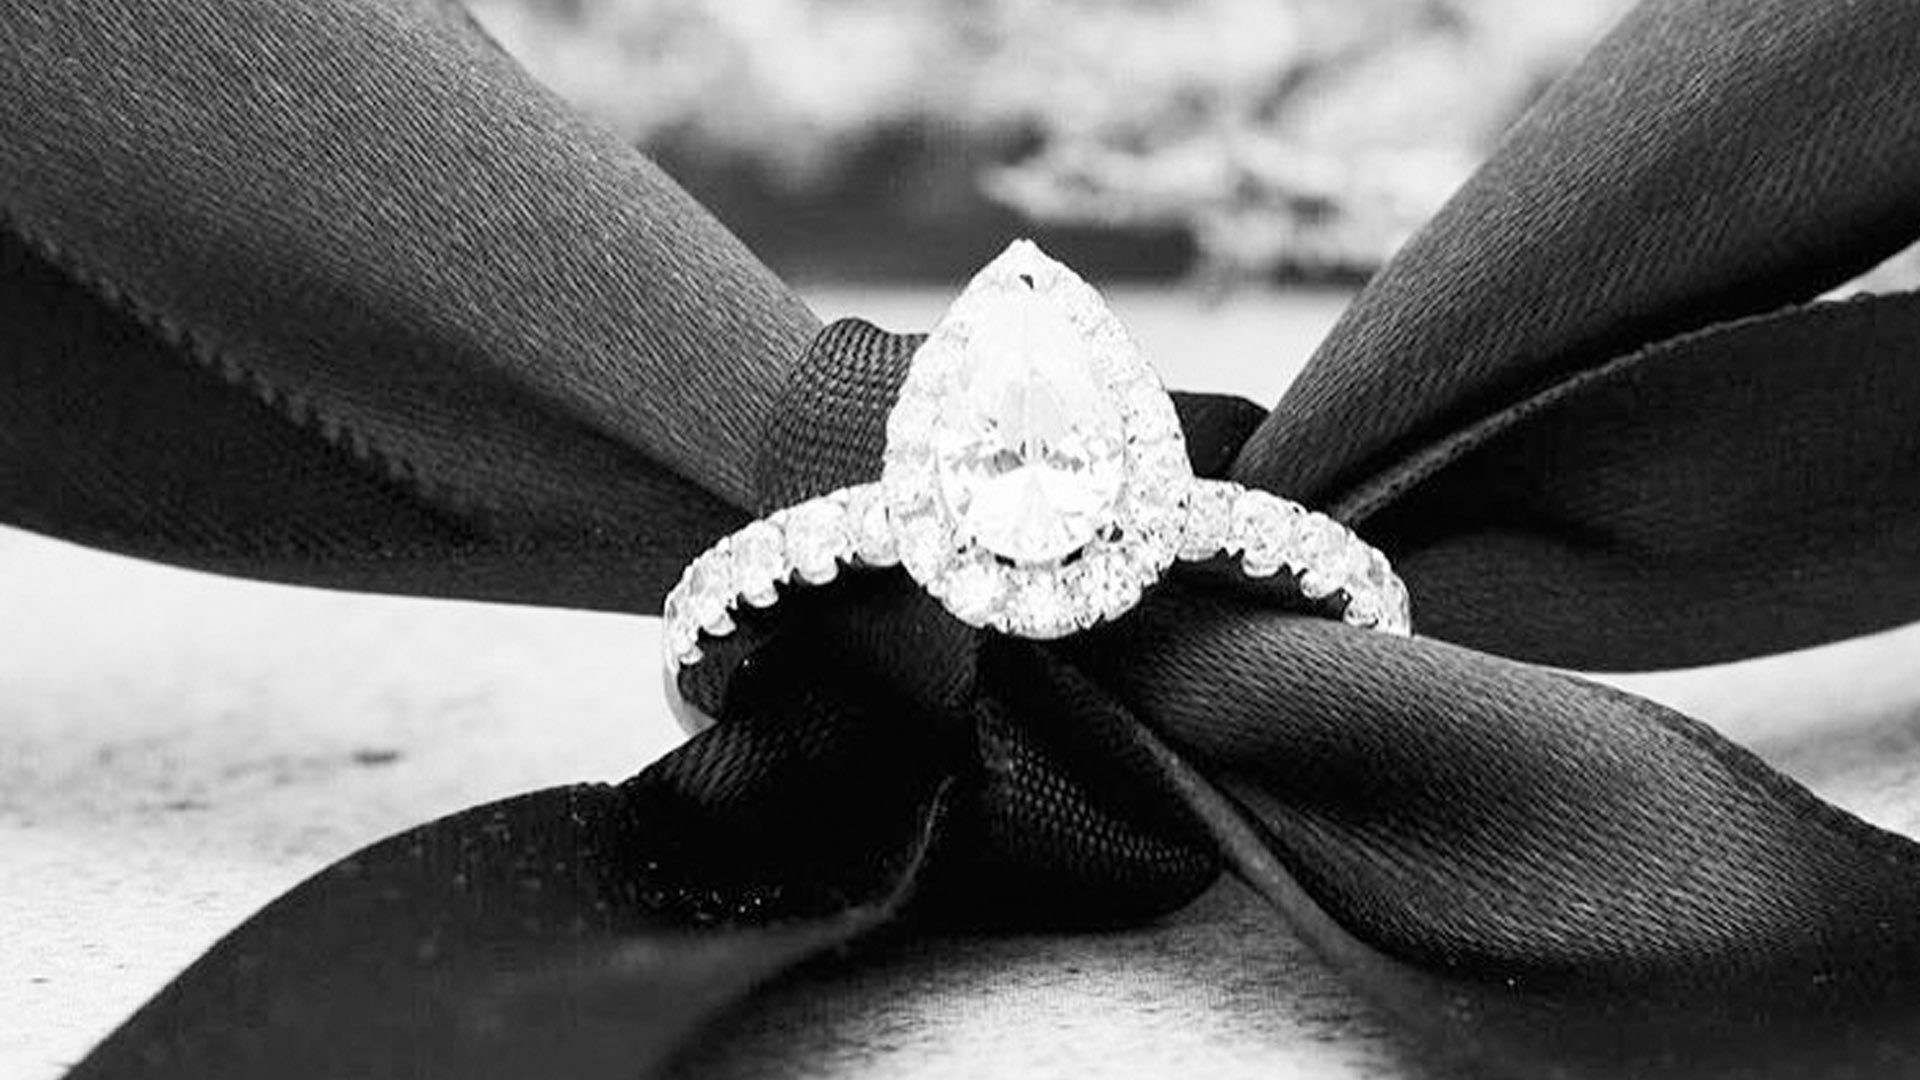 https://thediamondguys.com.au/wp-content/uploads/2017/11/How-to-Make-your-Diamond-Engagement-Ring-Look-Bigger-The-Diamond-Guys.jpg